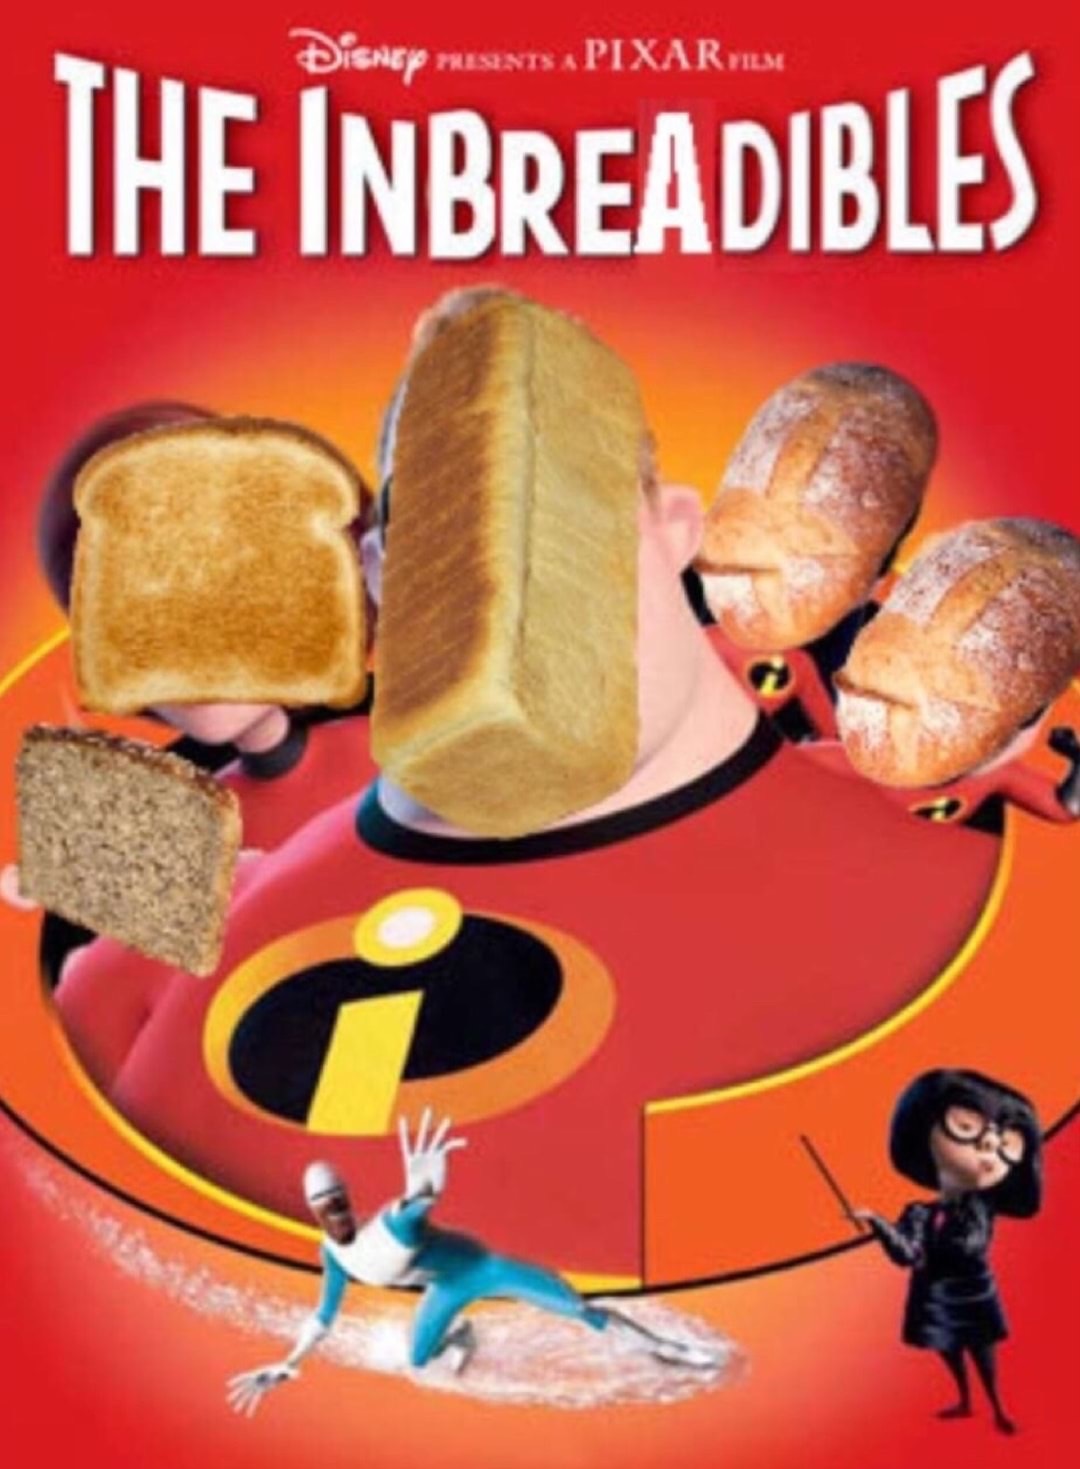 incredible movie cover - Disney Presents A Pixarilm The Inbreadibles